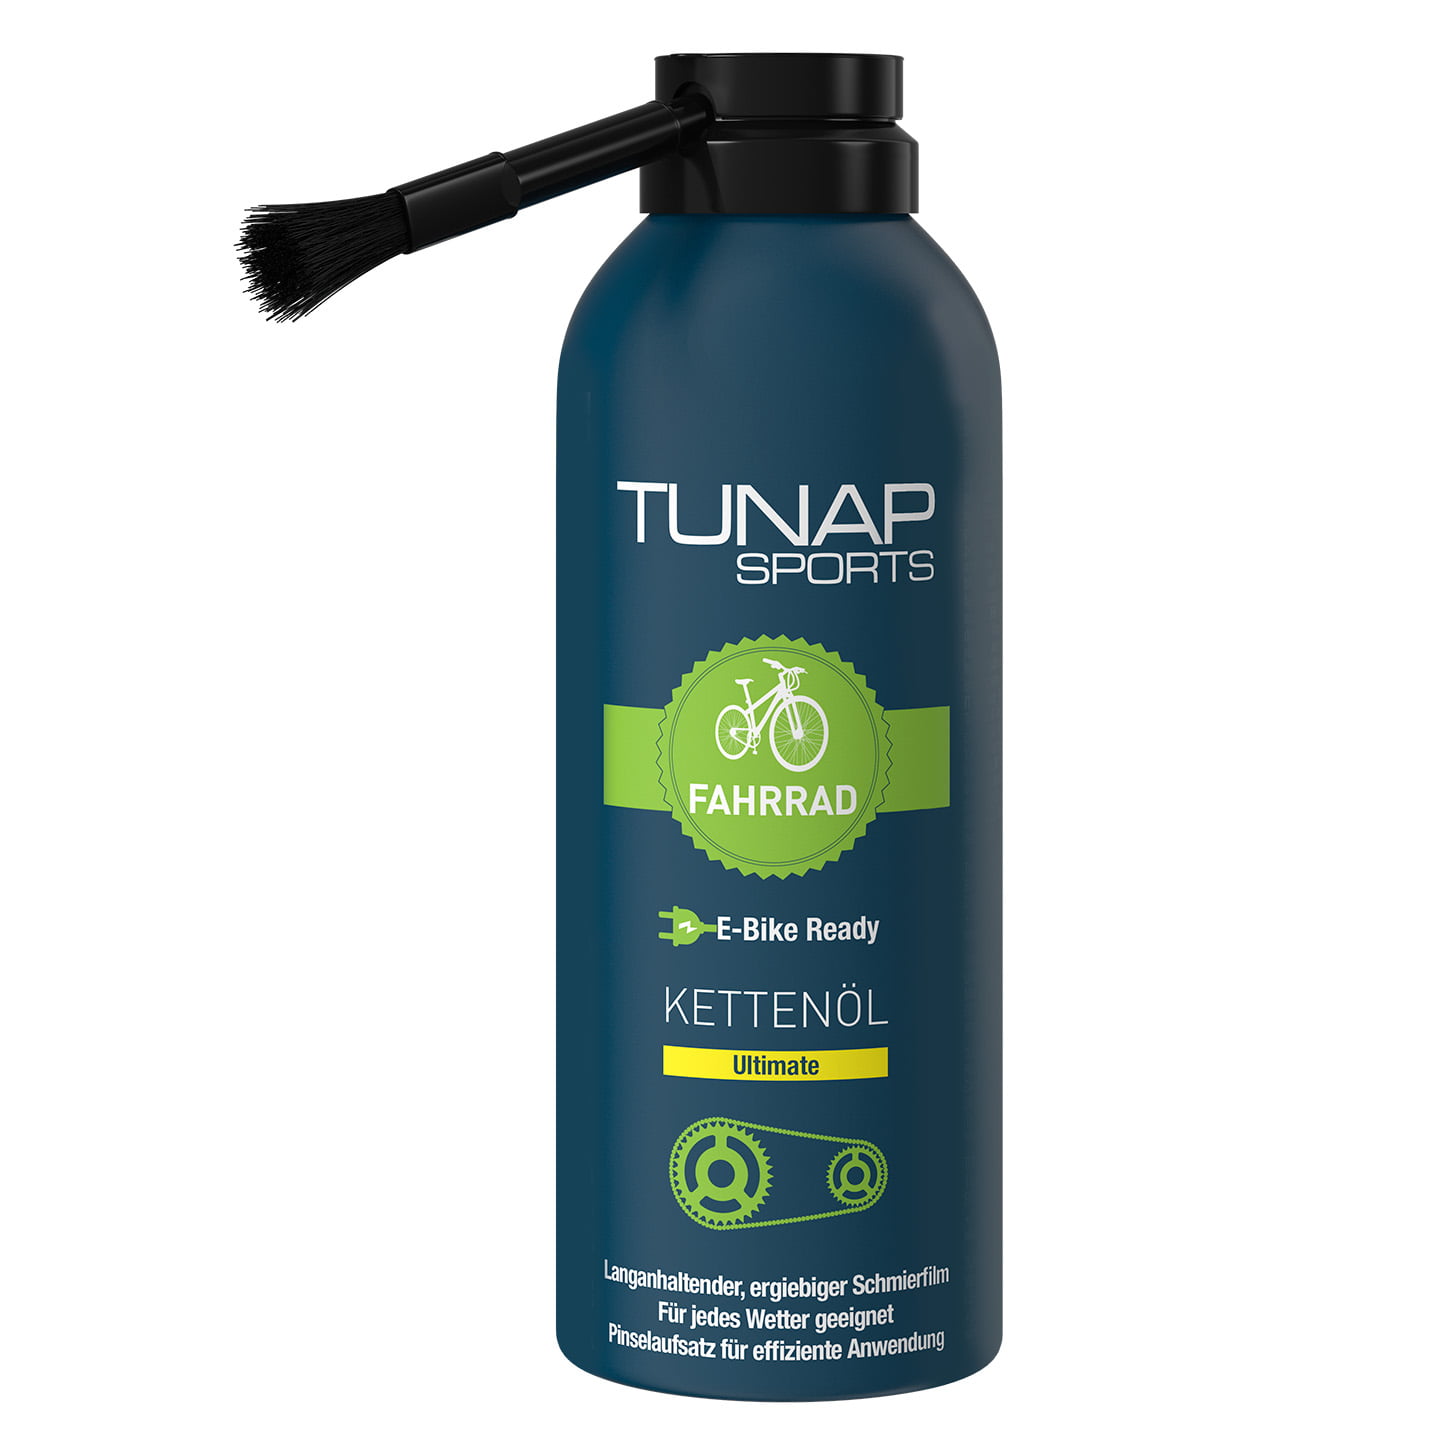 TUNAP SPORTS Ultimate Chain Oil 125 ml, Bike accessories